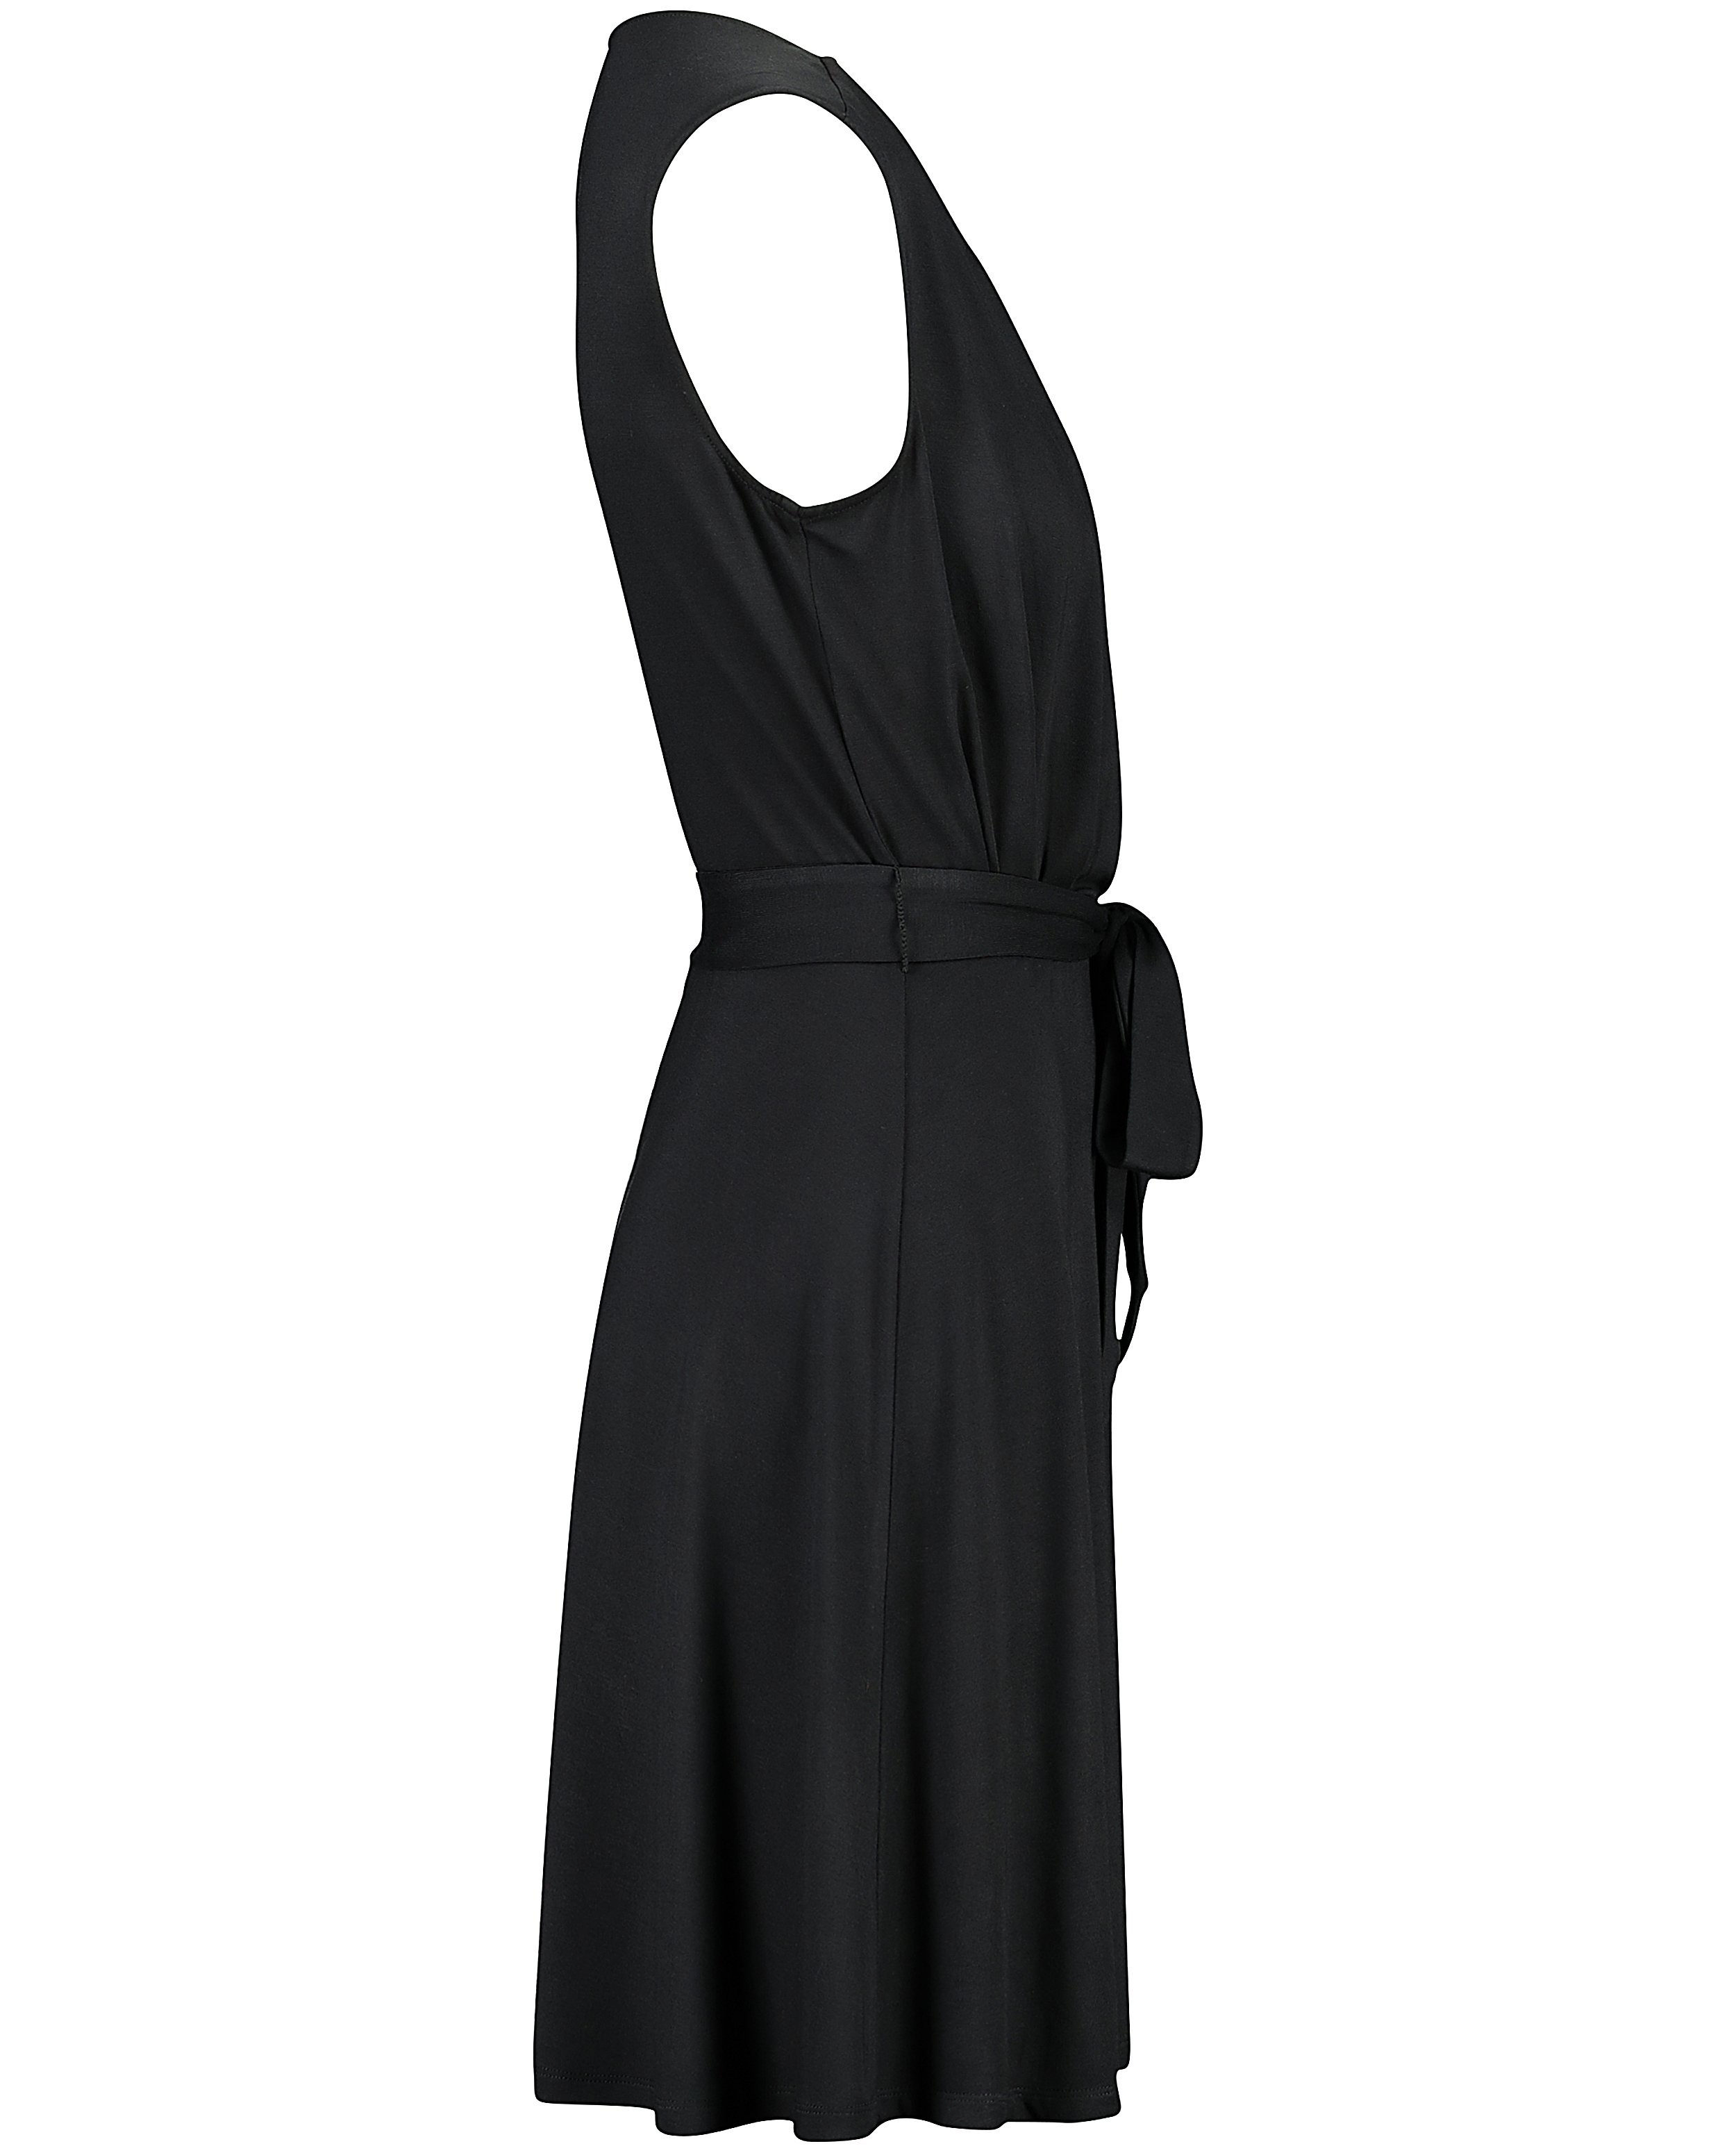 Kleedjes - Zwarte jurk met knooplint